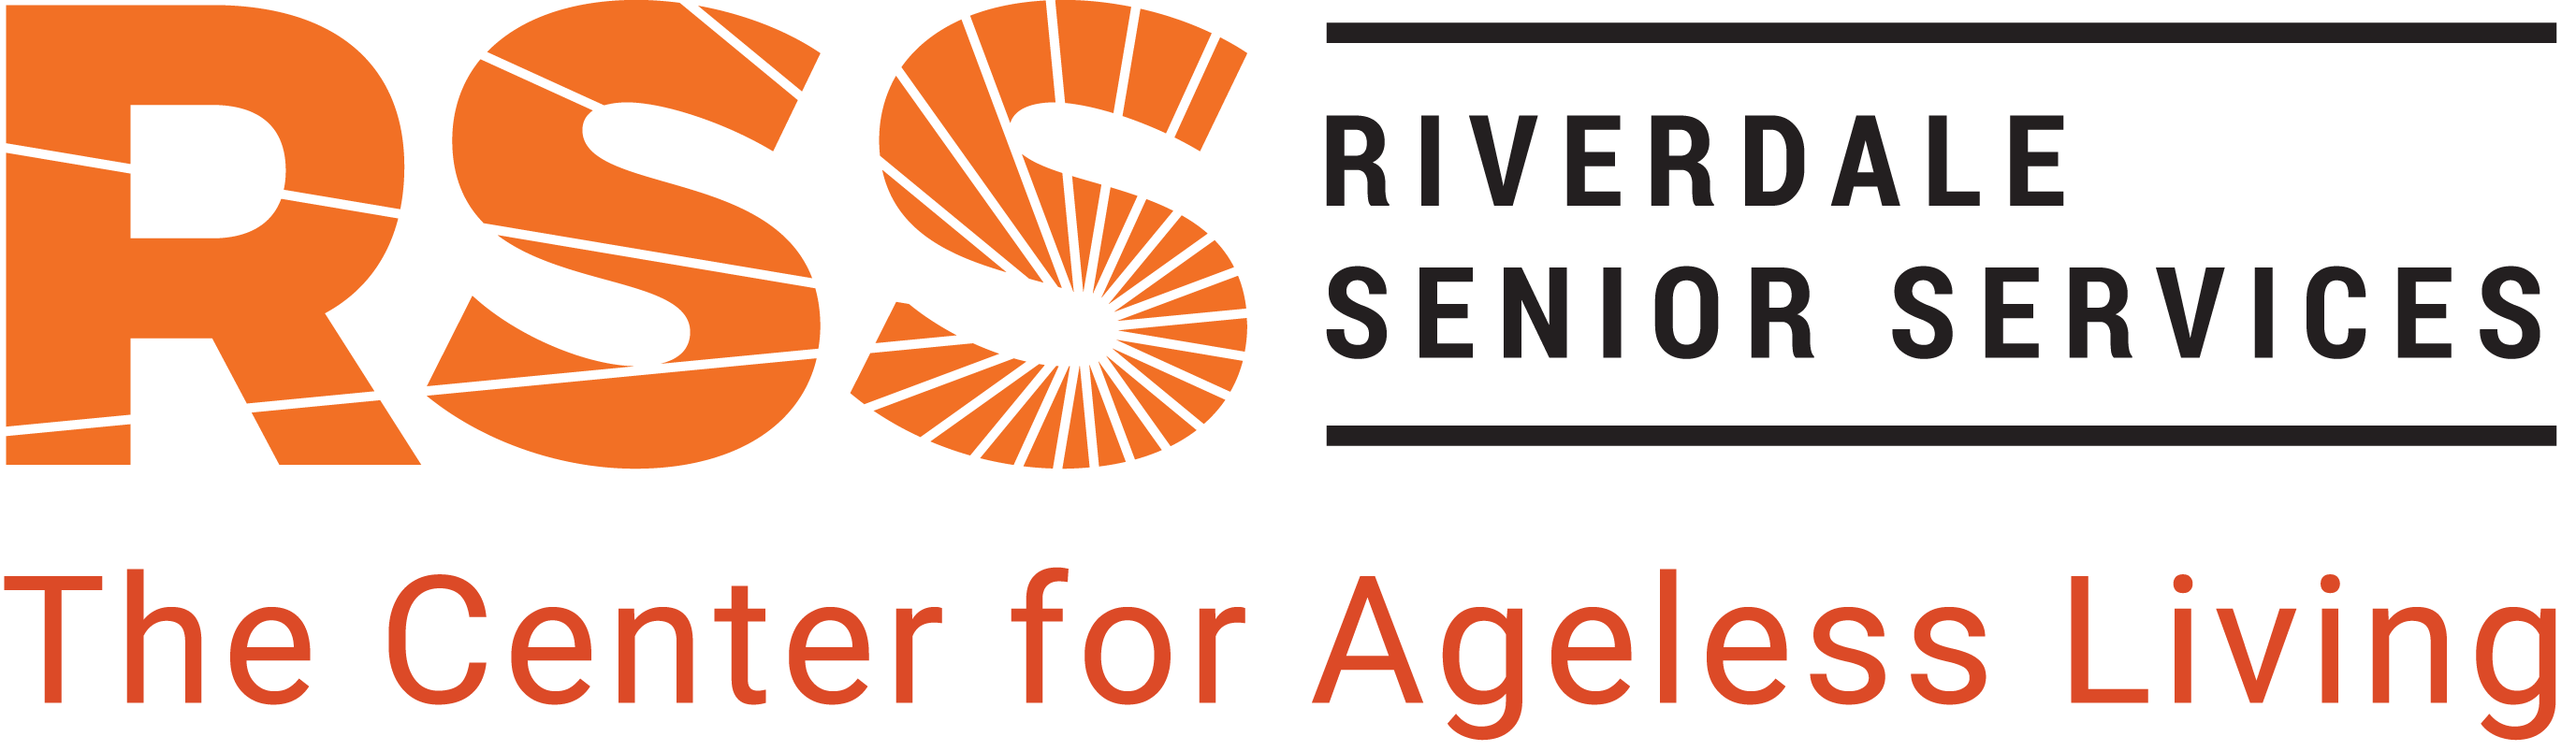 Riverdale Senior Services Is Now RSS